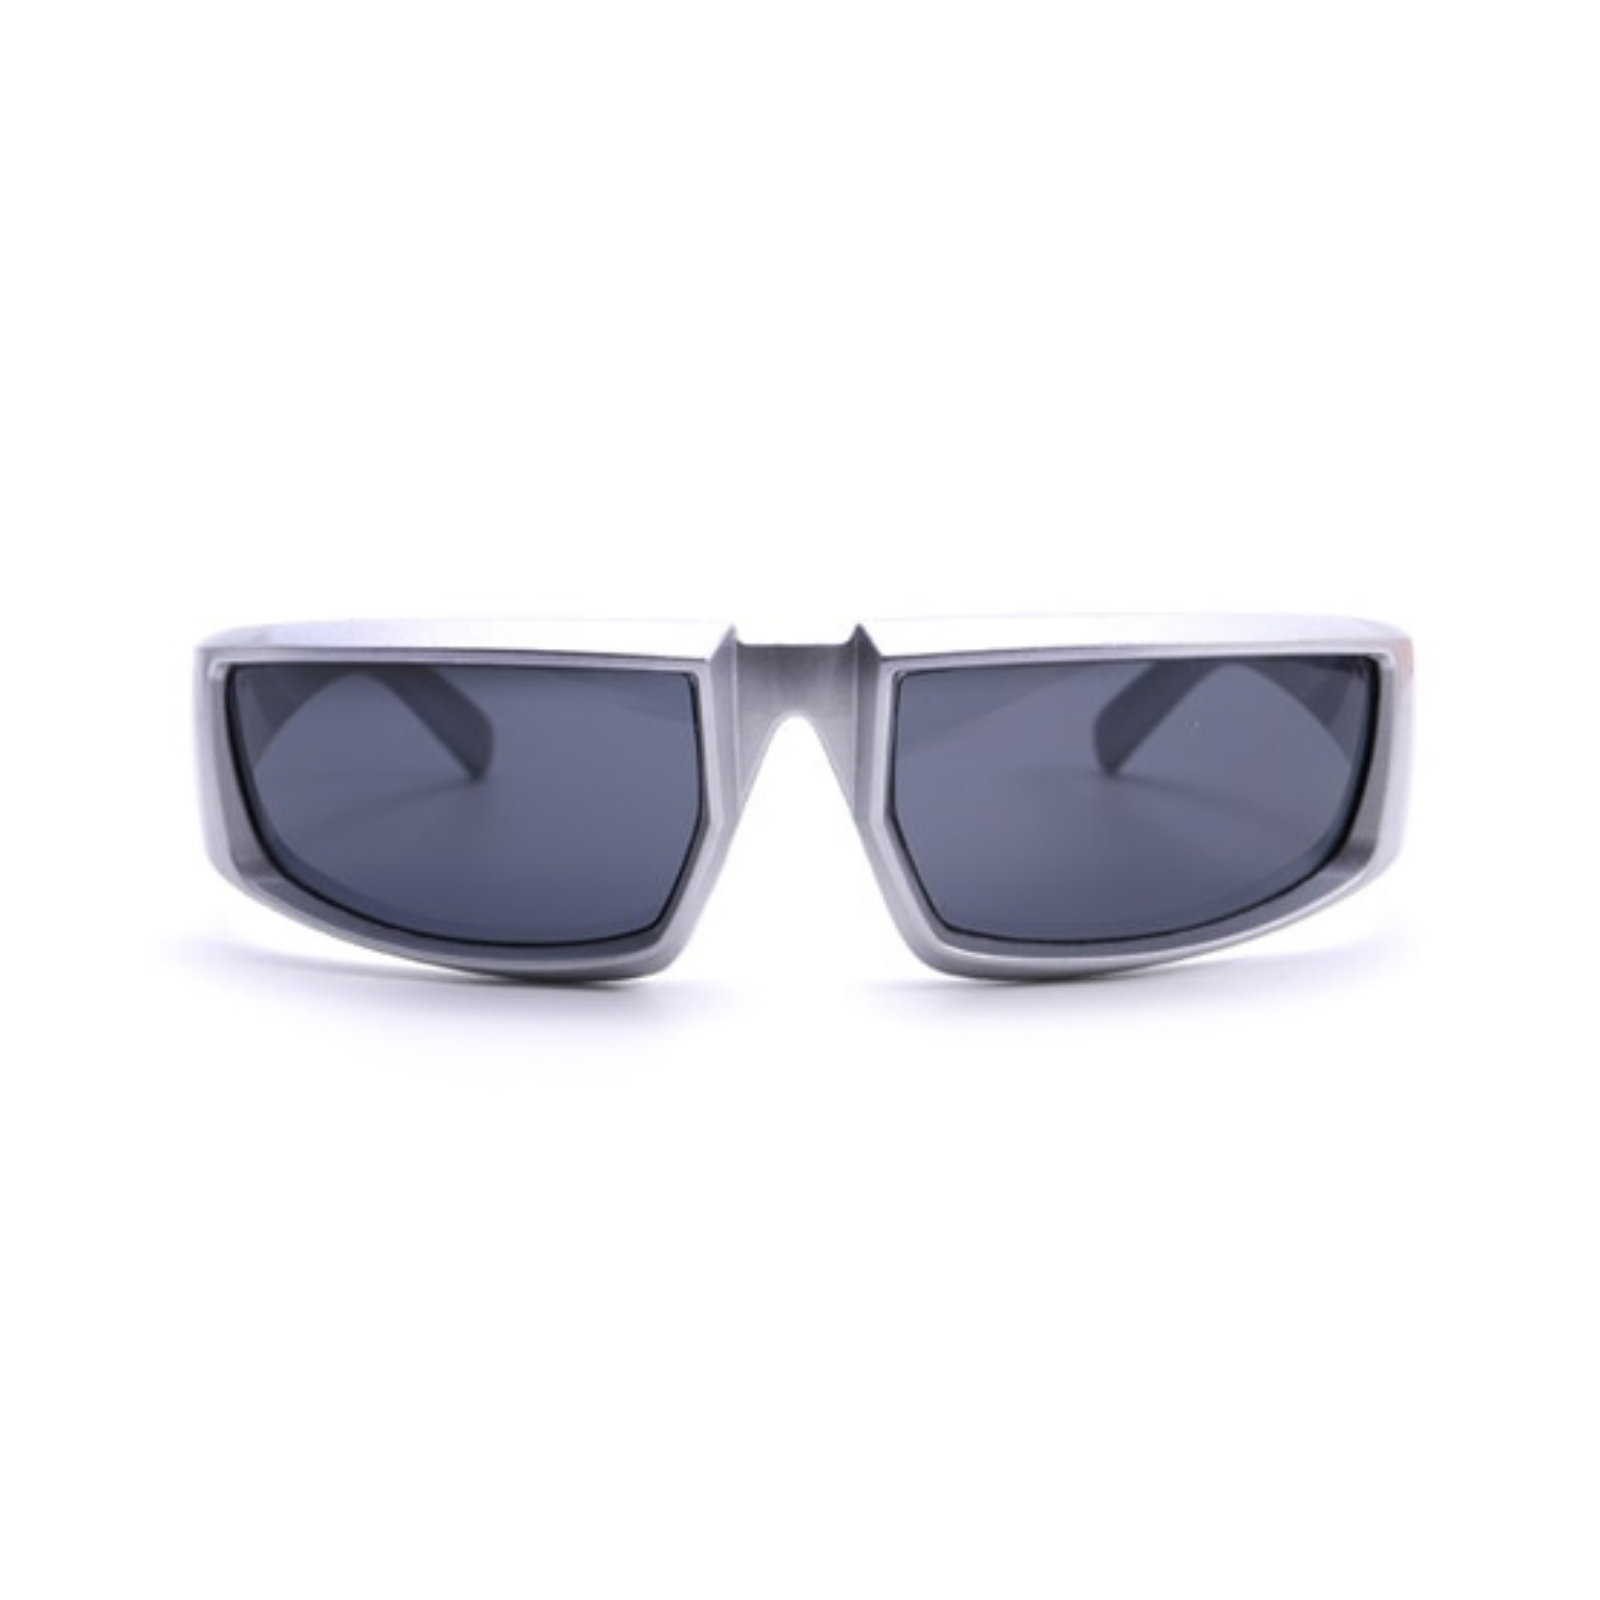 Lexus Sunglasses + Silver Black